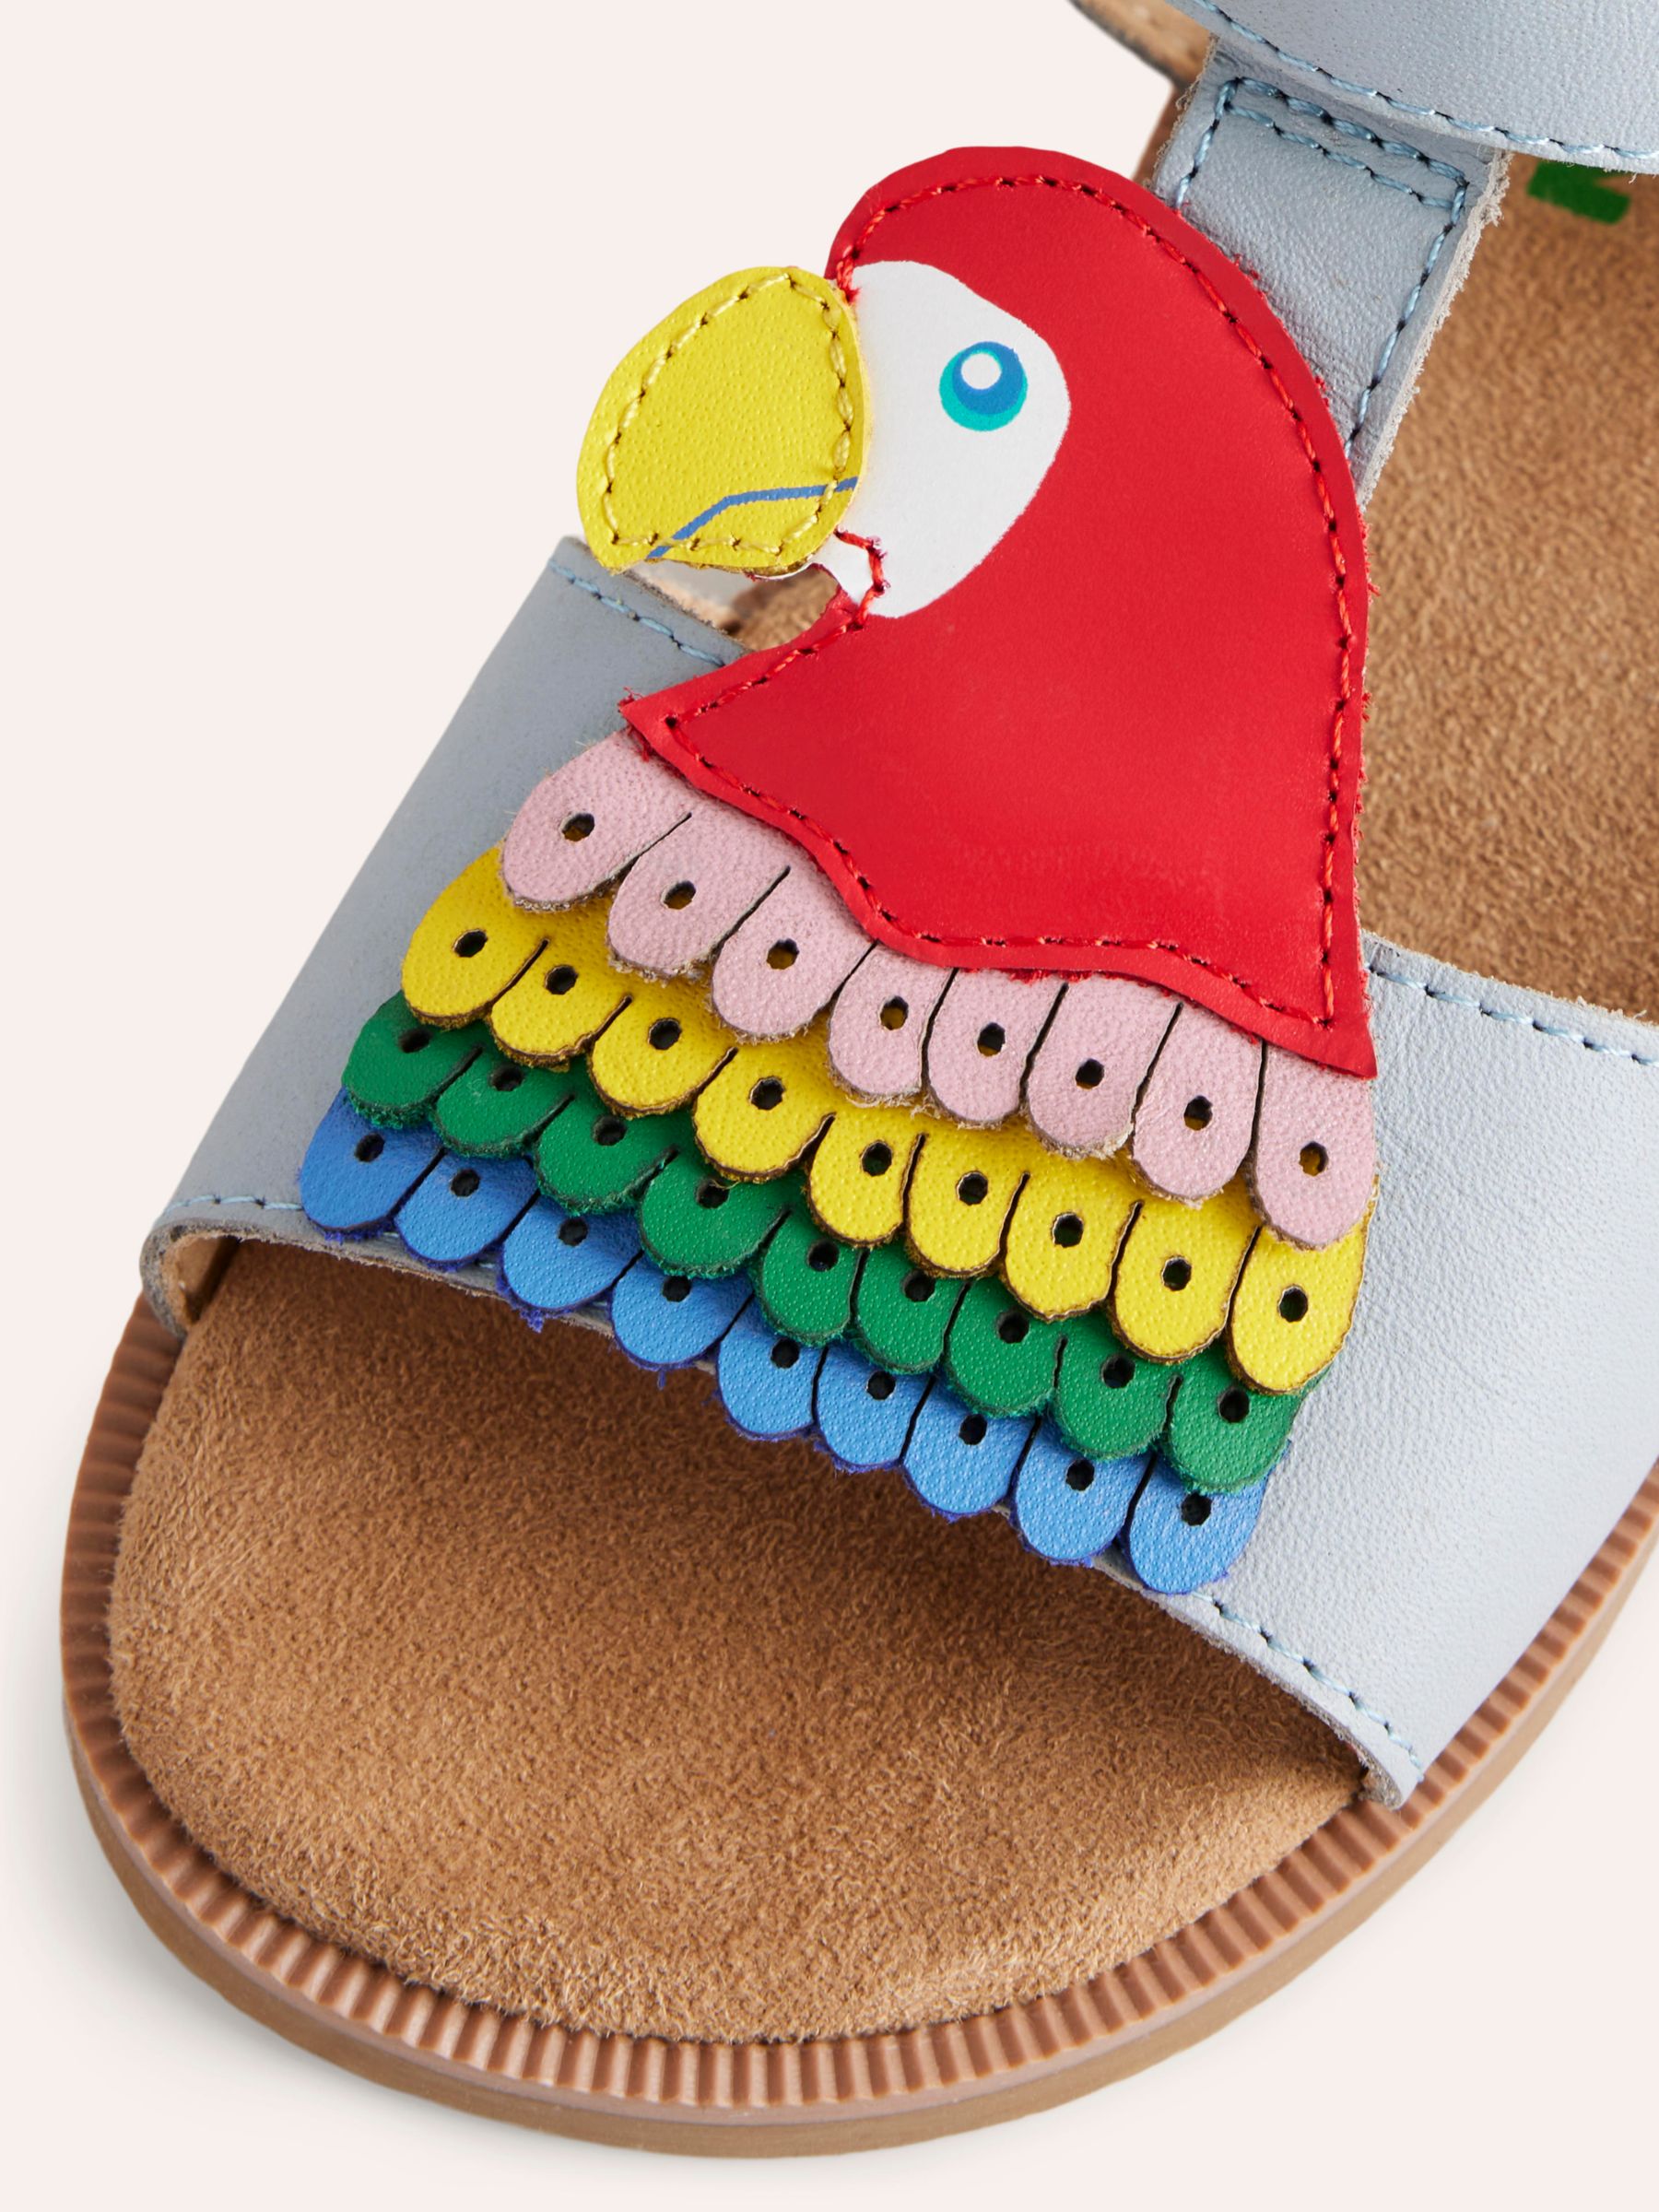 Mini Boden Kids' Fun Parrot Leather Sandals, Blue/Multi, 7 Jnr